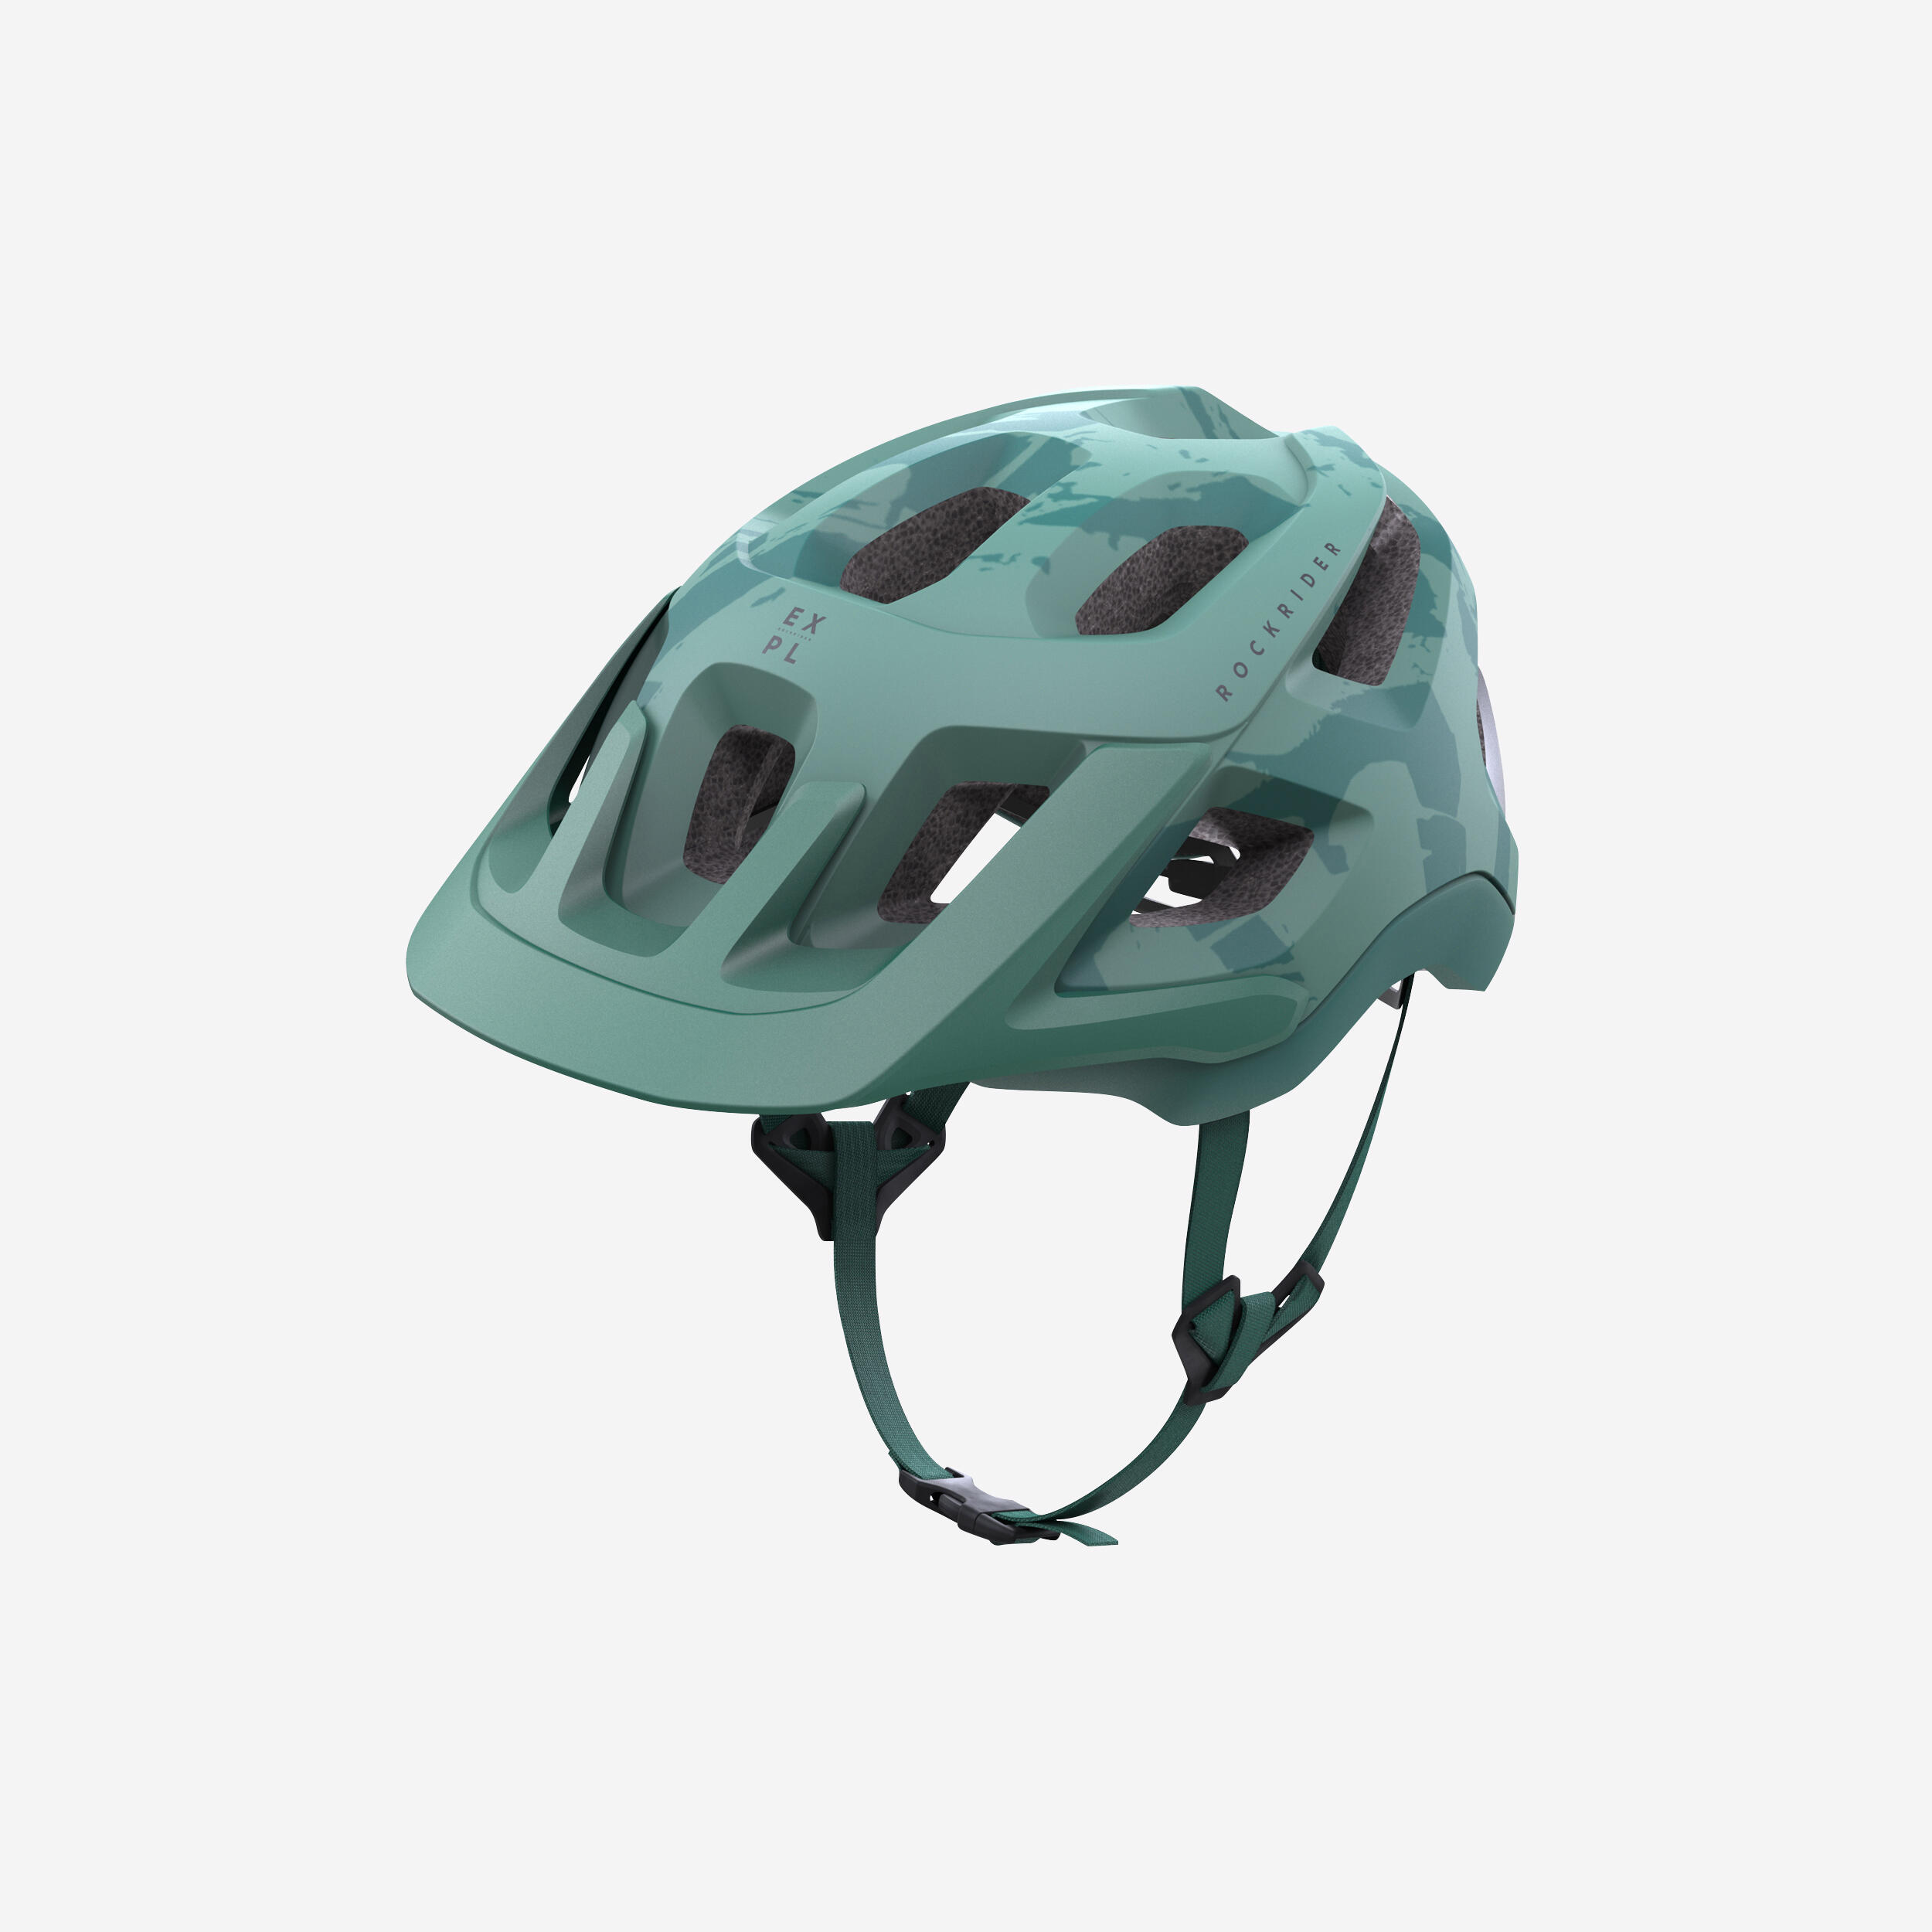 ROCKRIDER Mountain Bike Helmet EXPL 500 - Green